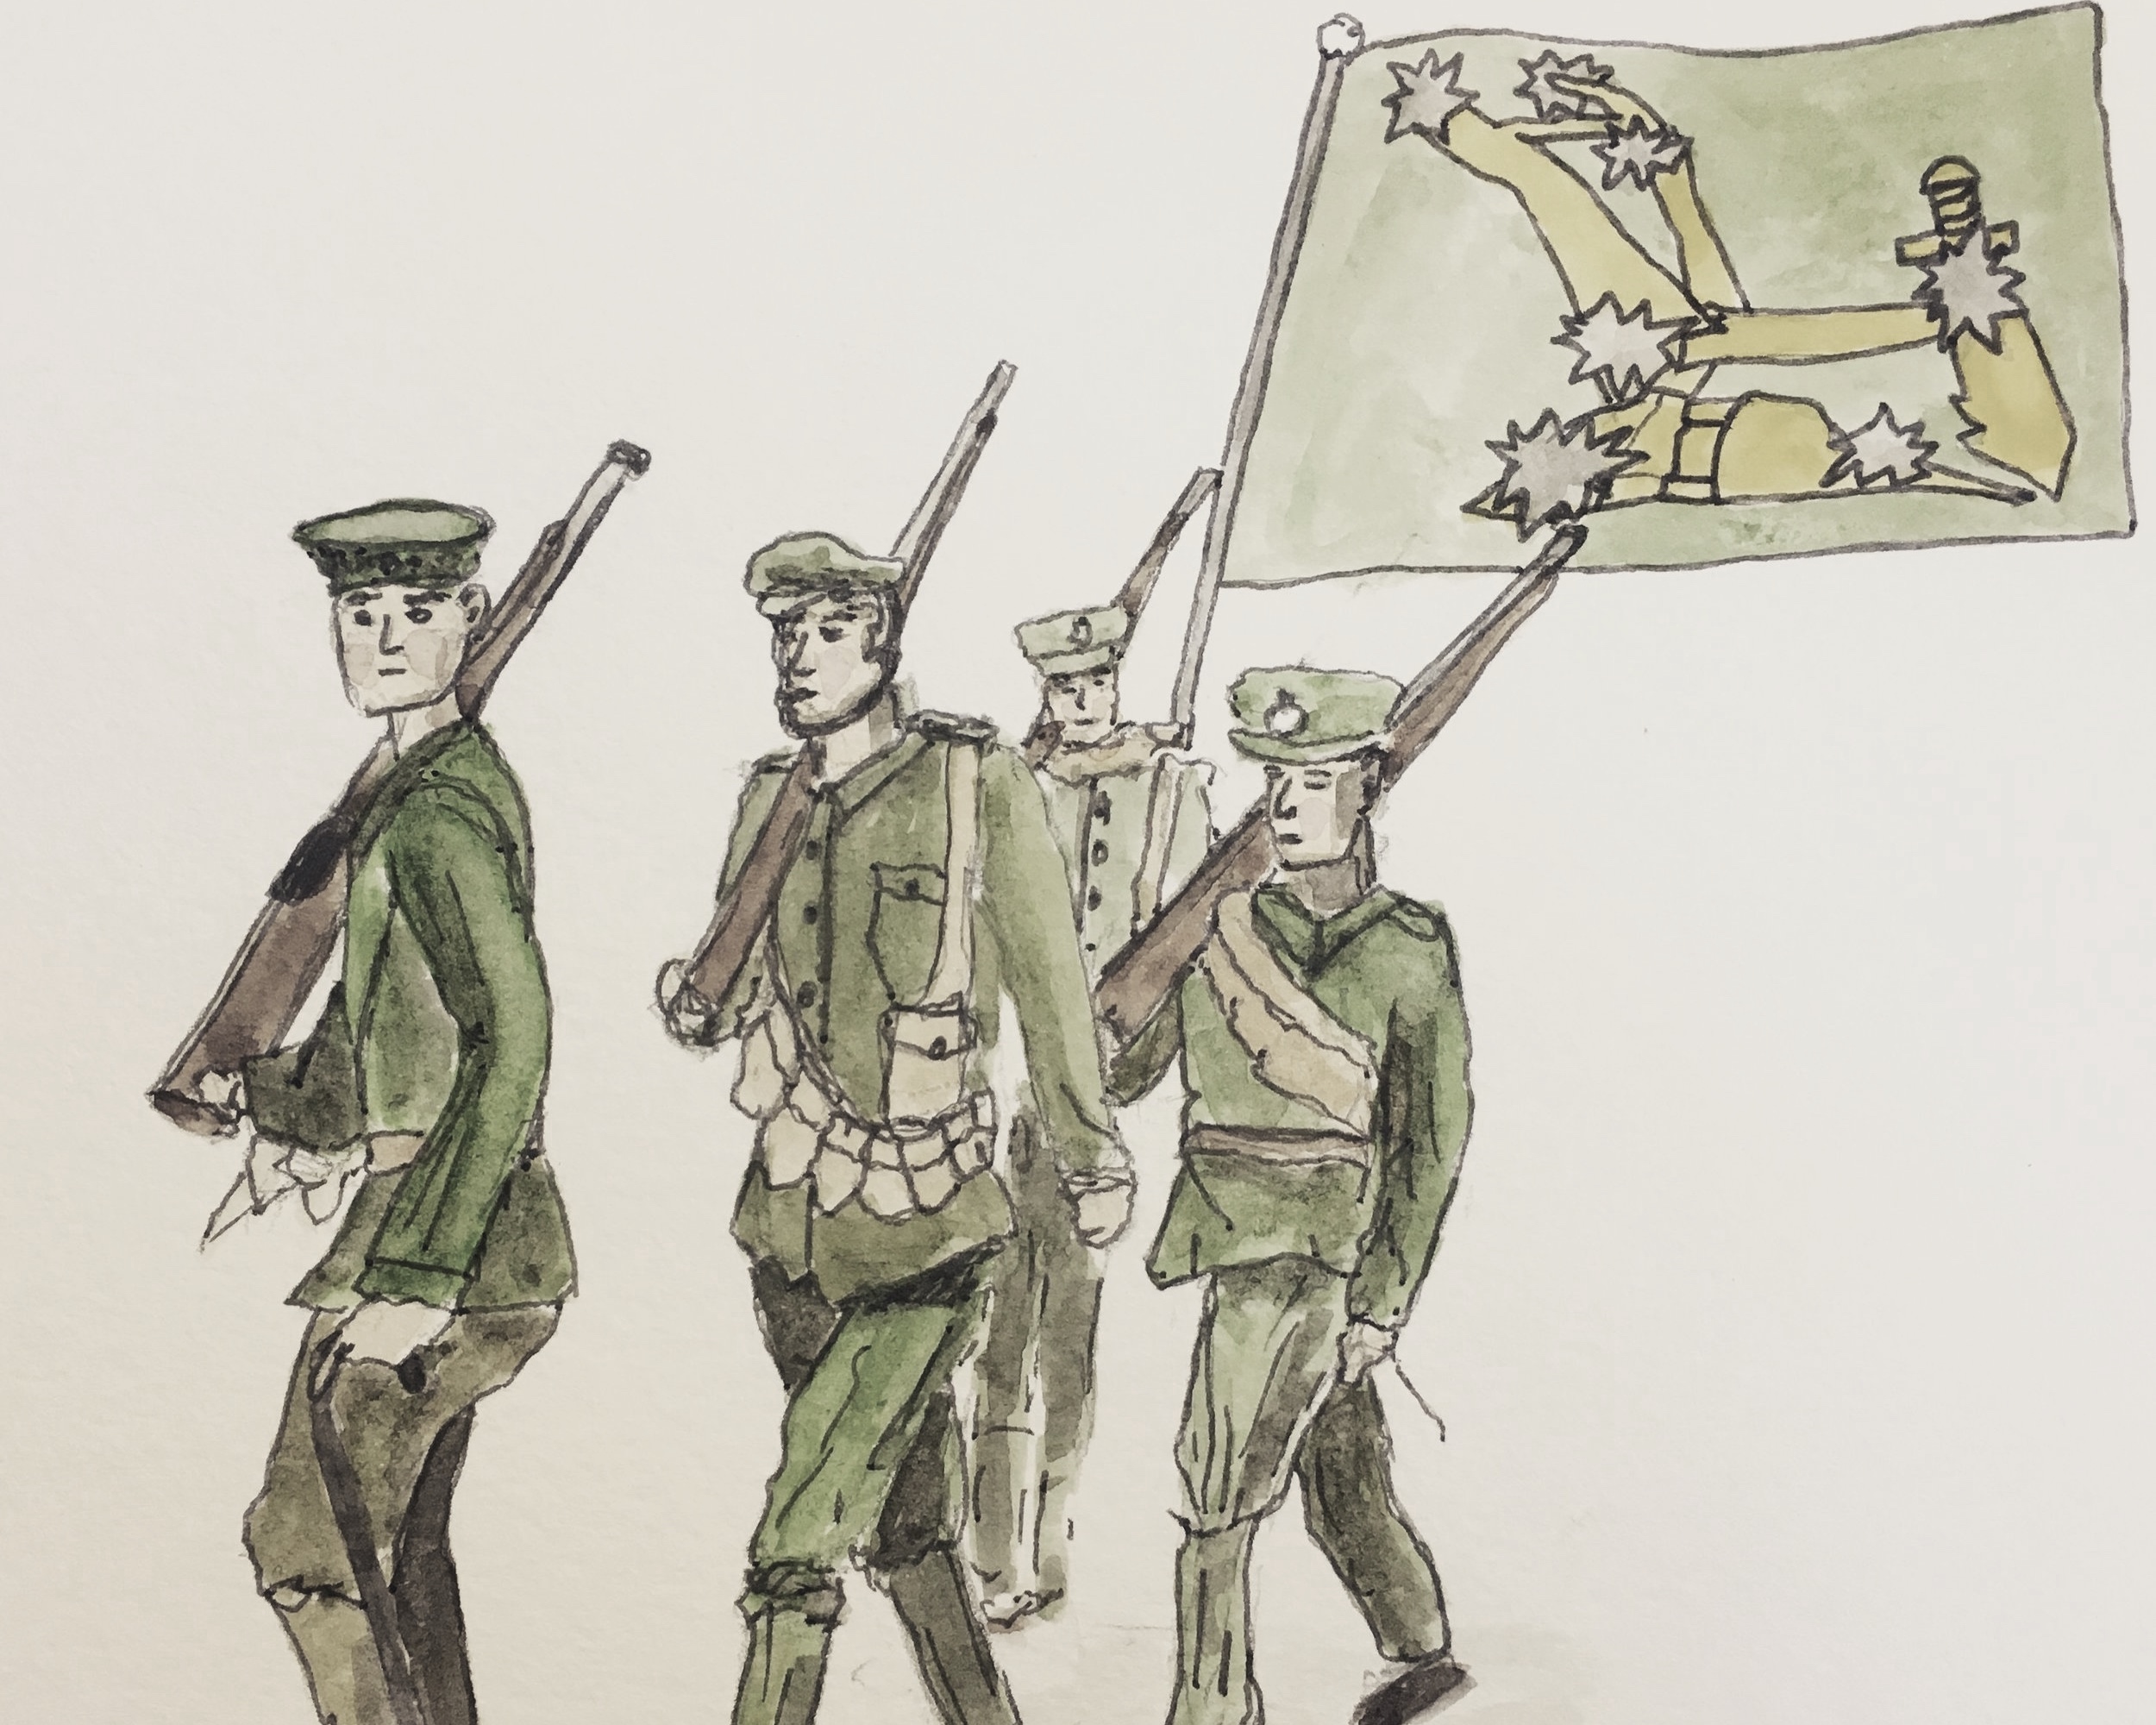 Irish Citizen Army Marching